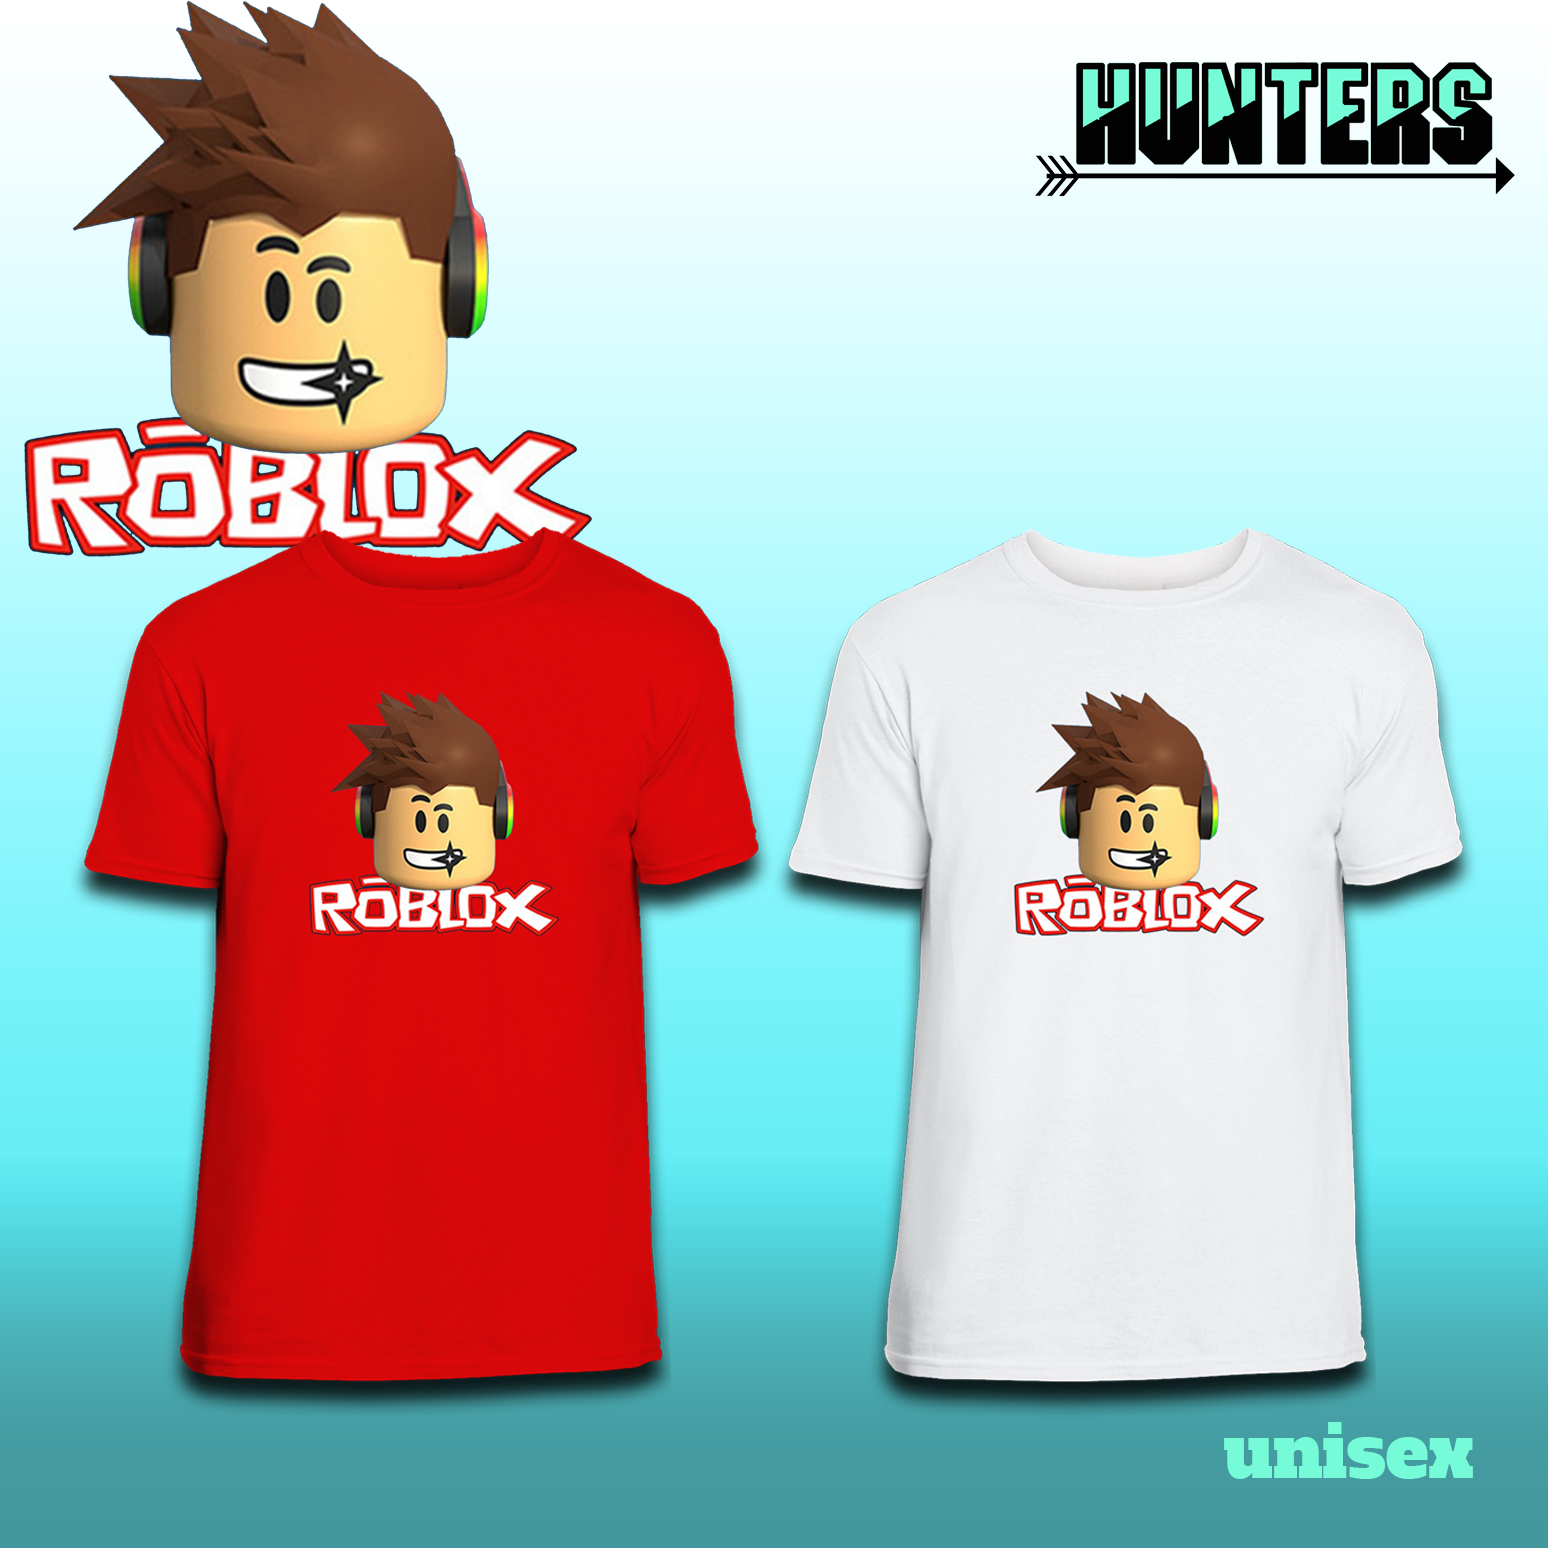 Roblox Logo Gamer Birthday Gift Idea For (Adult & Kiddie Size